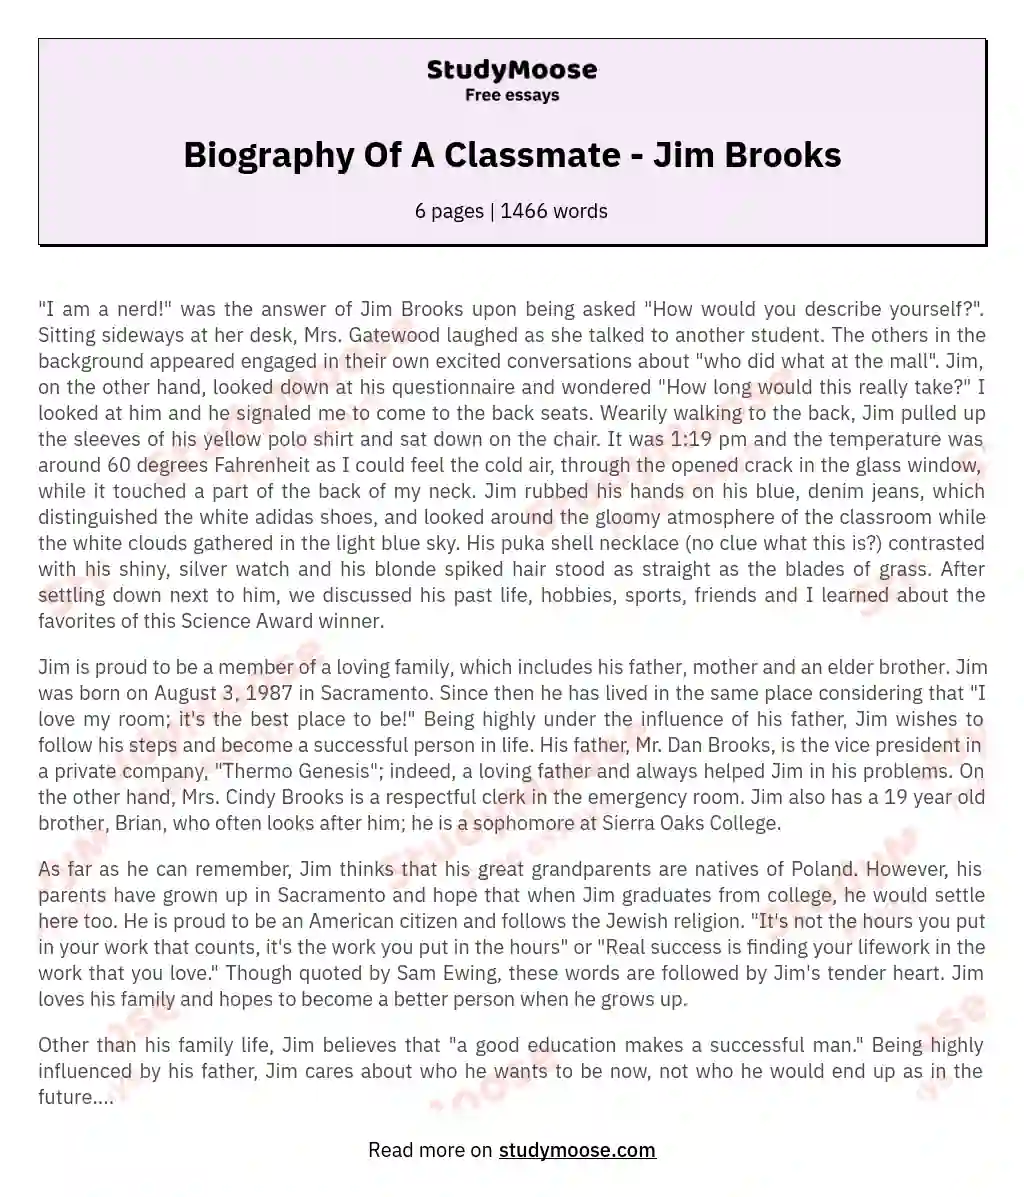 Biography Of A Classmate - Jim Brooks essay